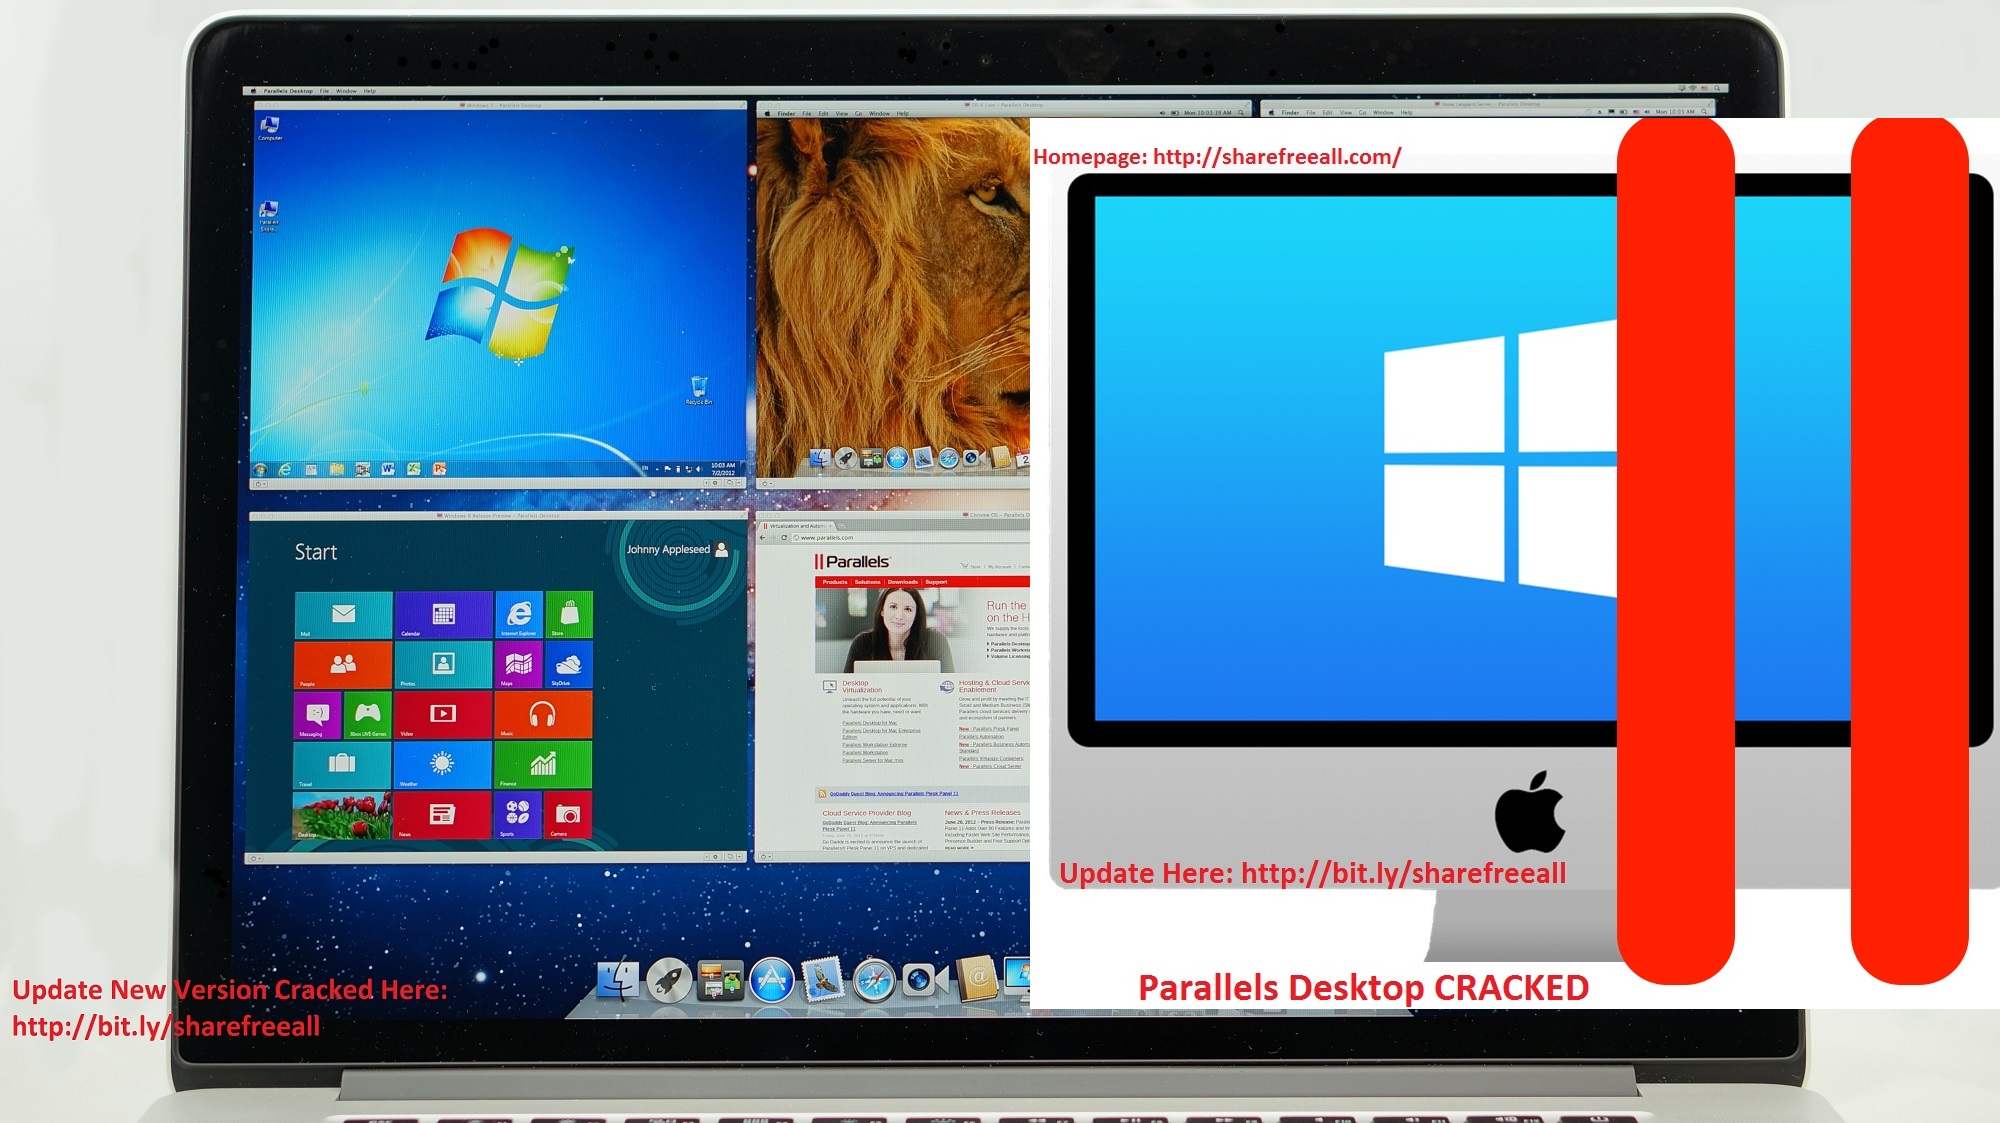 Parallels Desktop 7 Mac Download Free